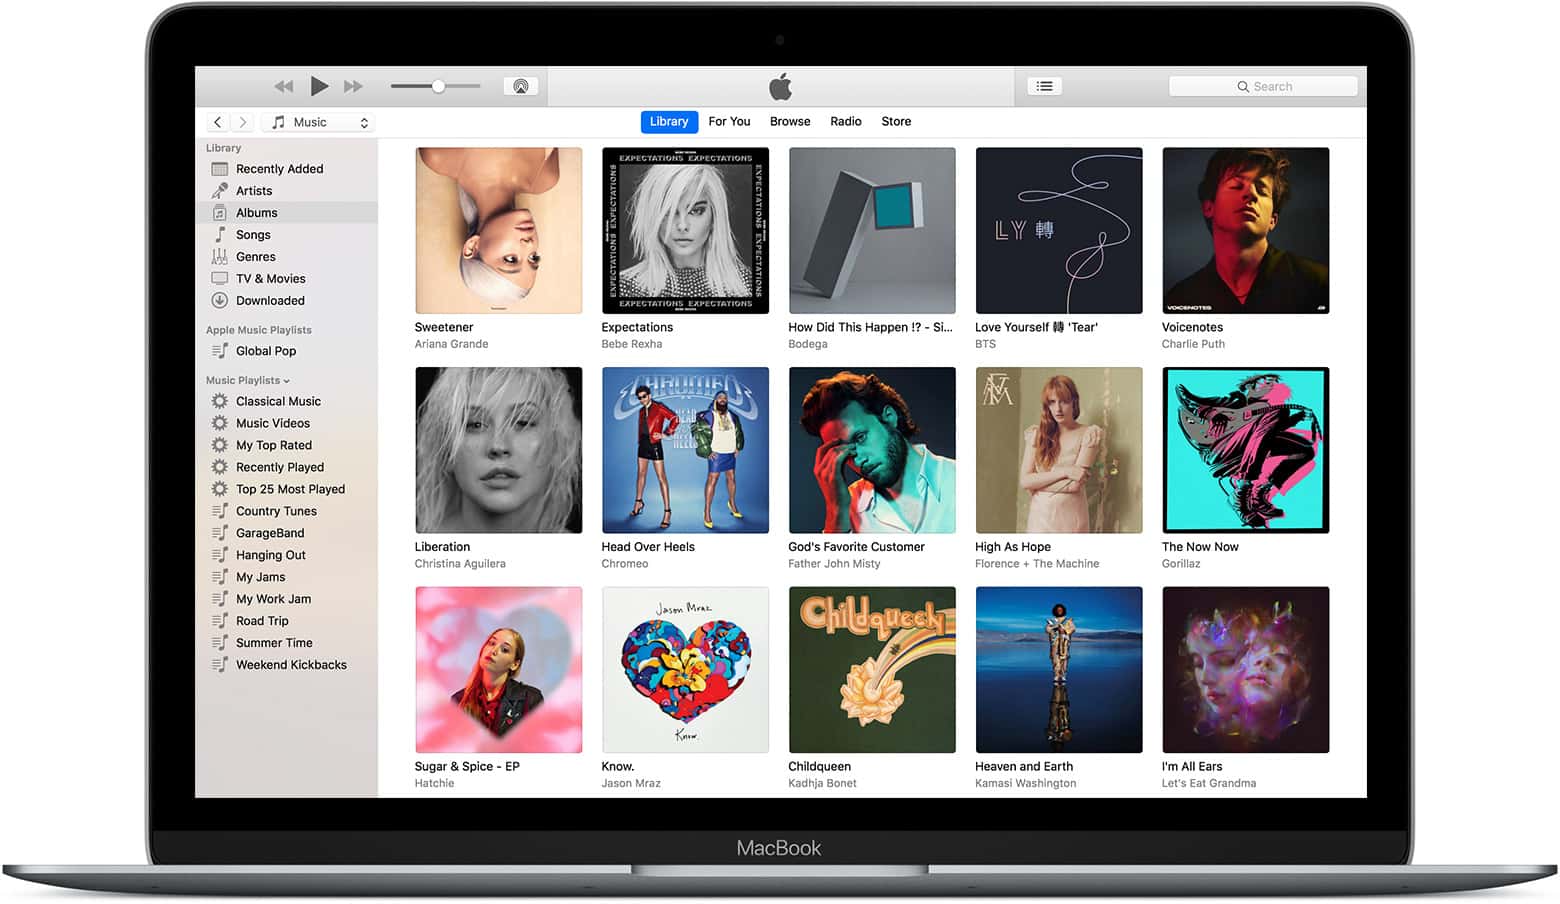 iTunes Apple